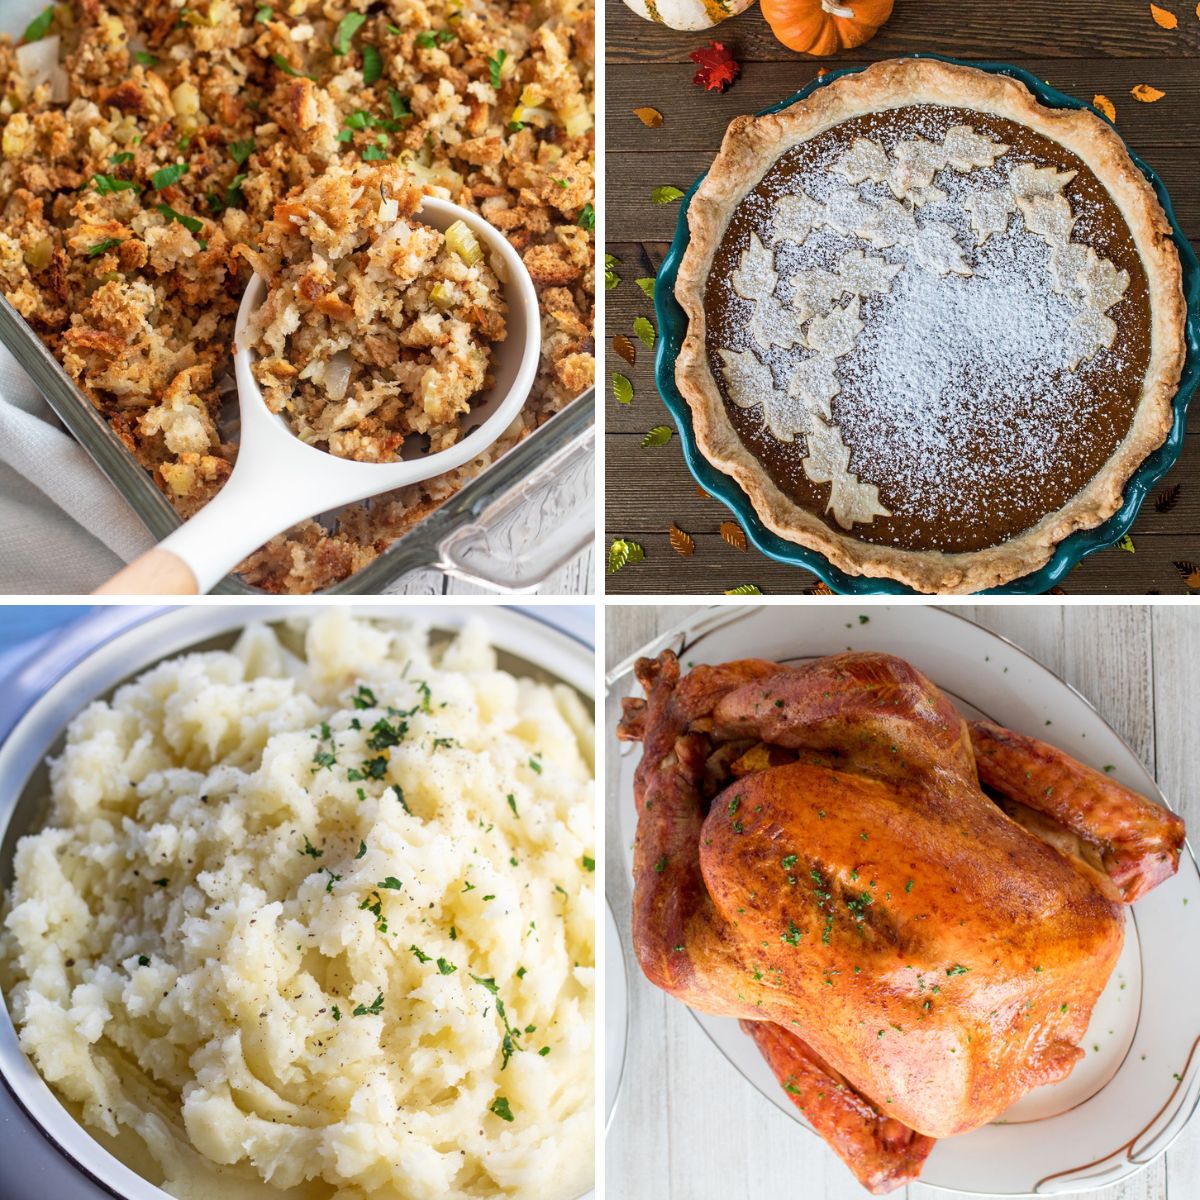 Gambar kolase persegi dengan 4 kuadran yang menampilkan gambar resep Thanksgiving.